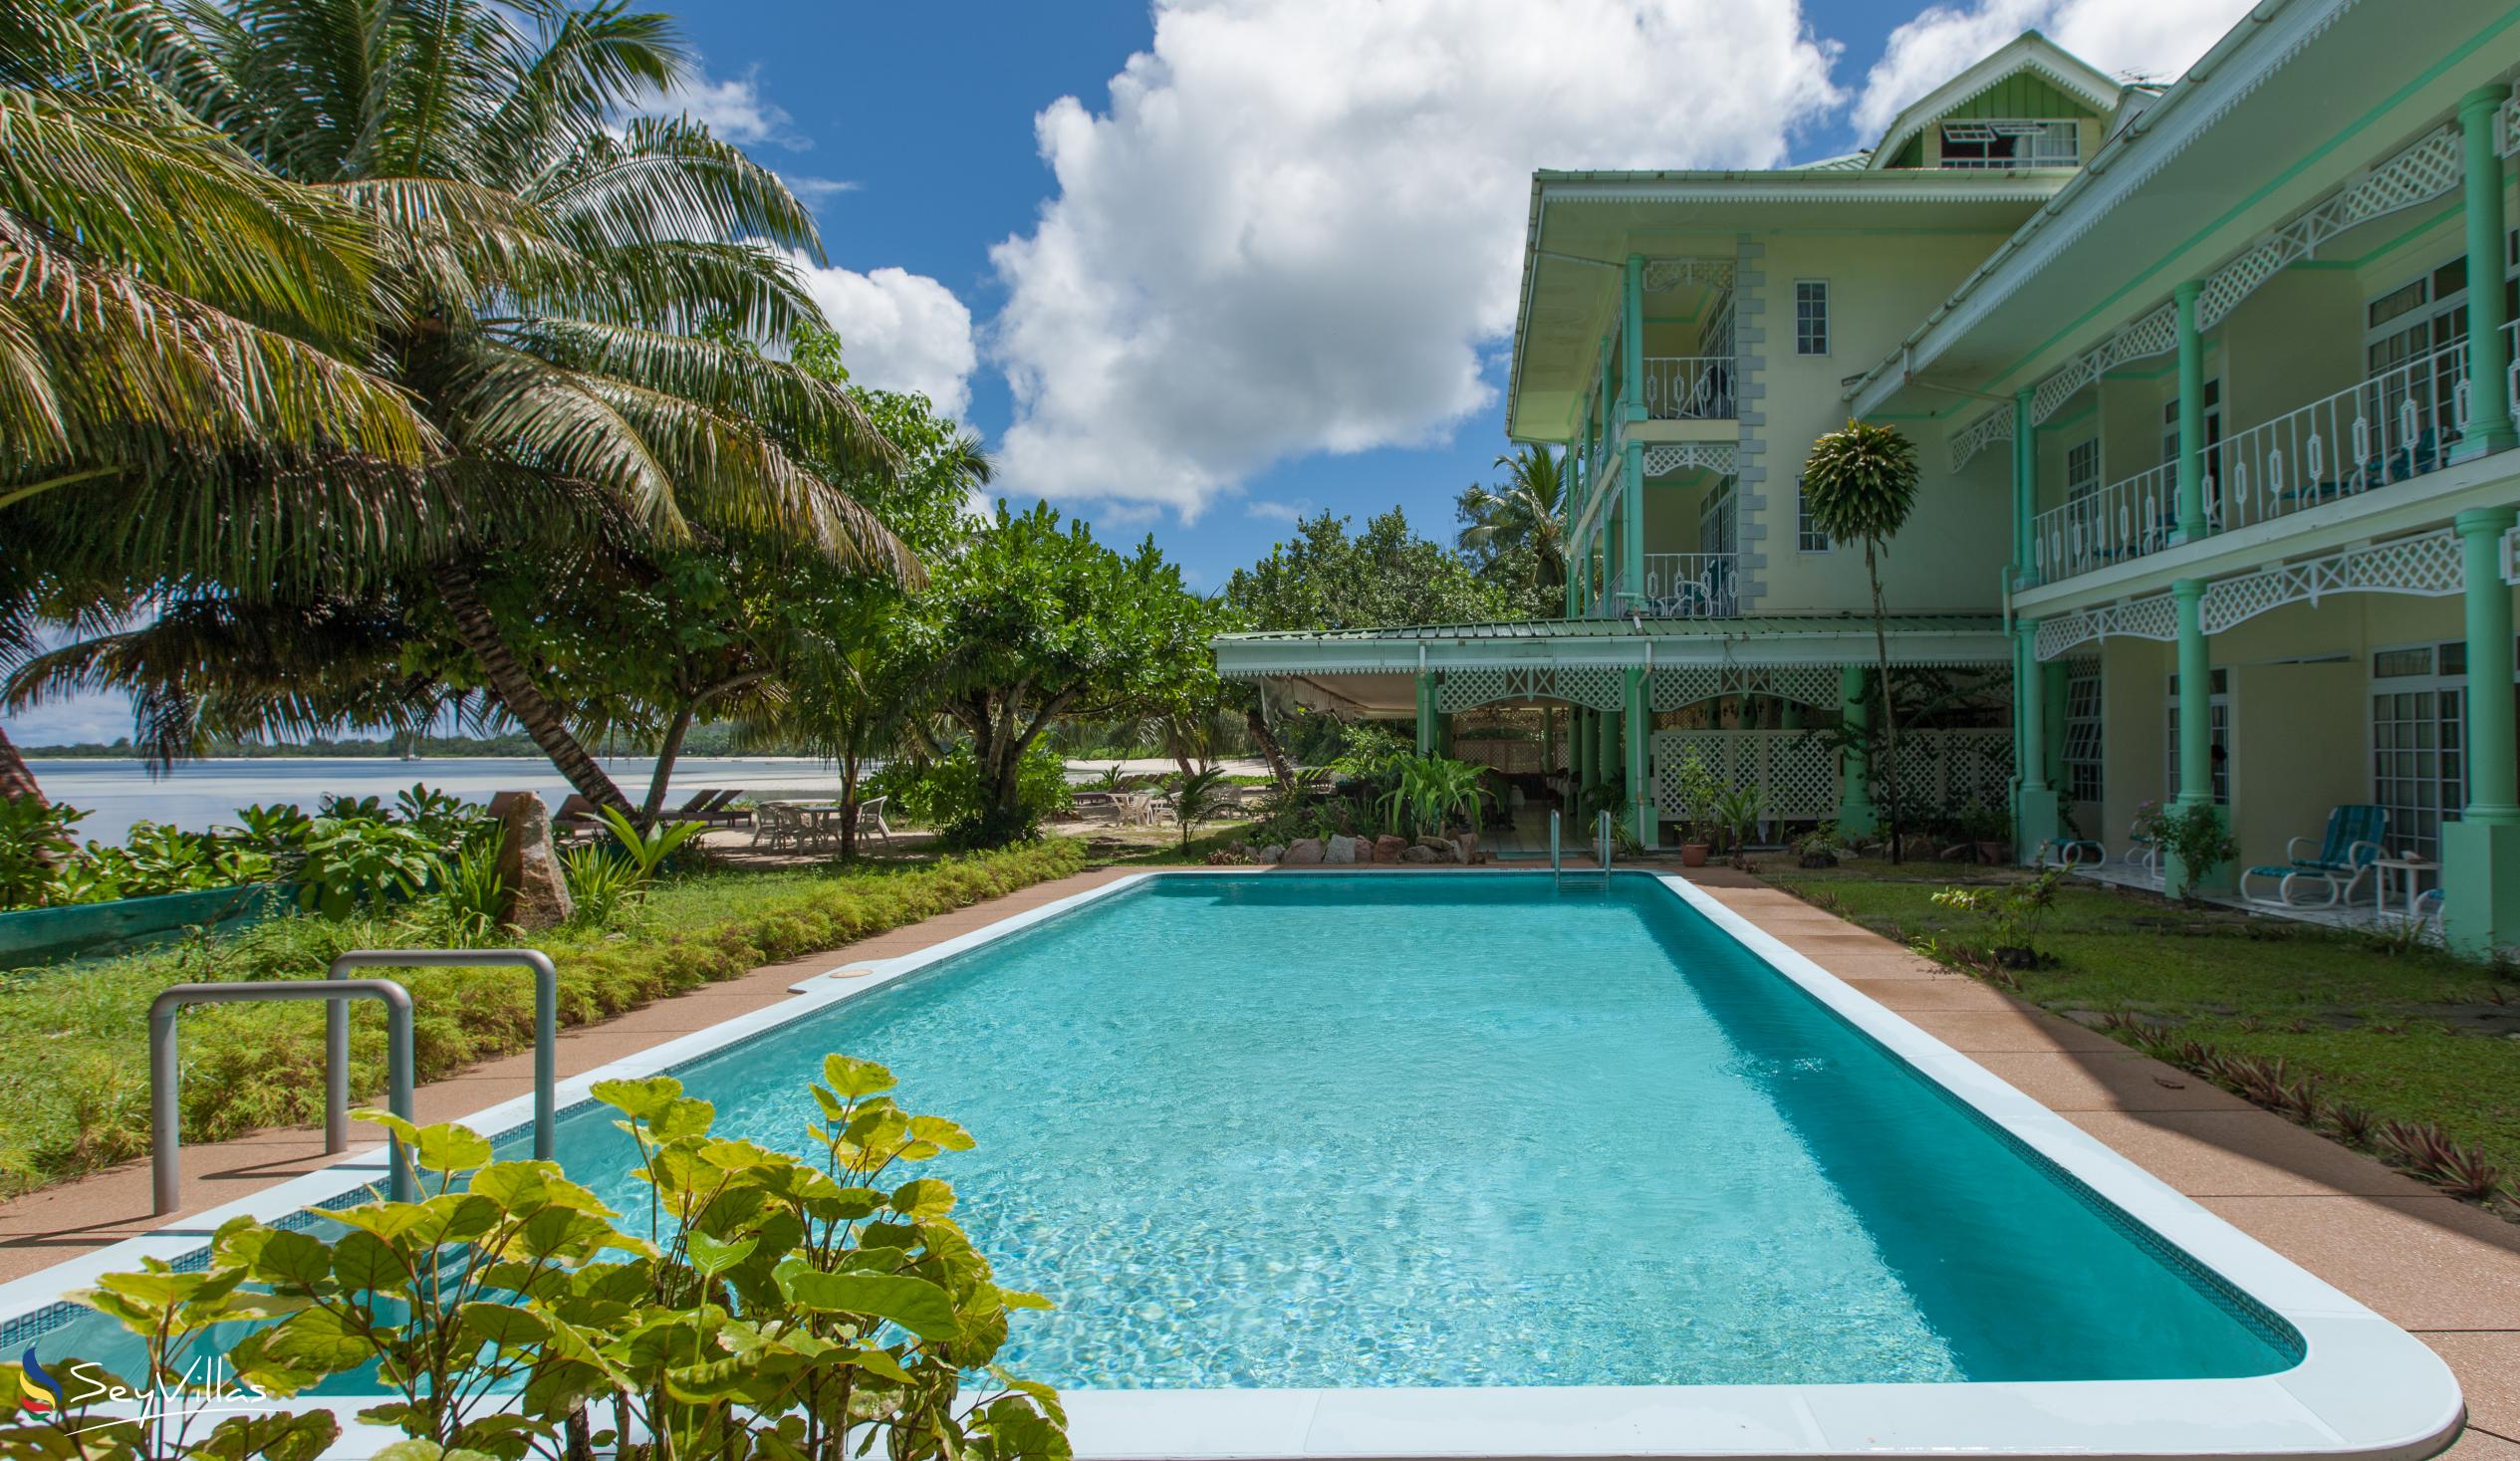 Photo 1: Palm Beach Hotel - Outdoor area - Praslin (Seychelles)